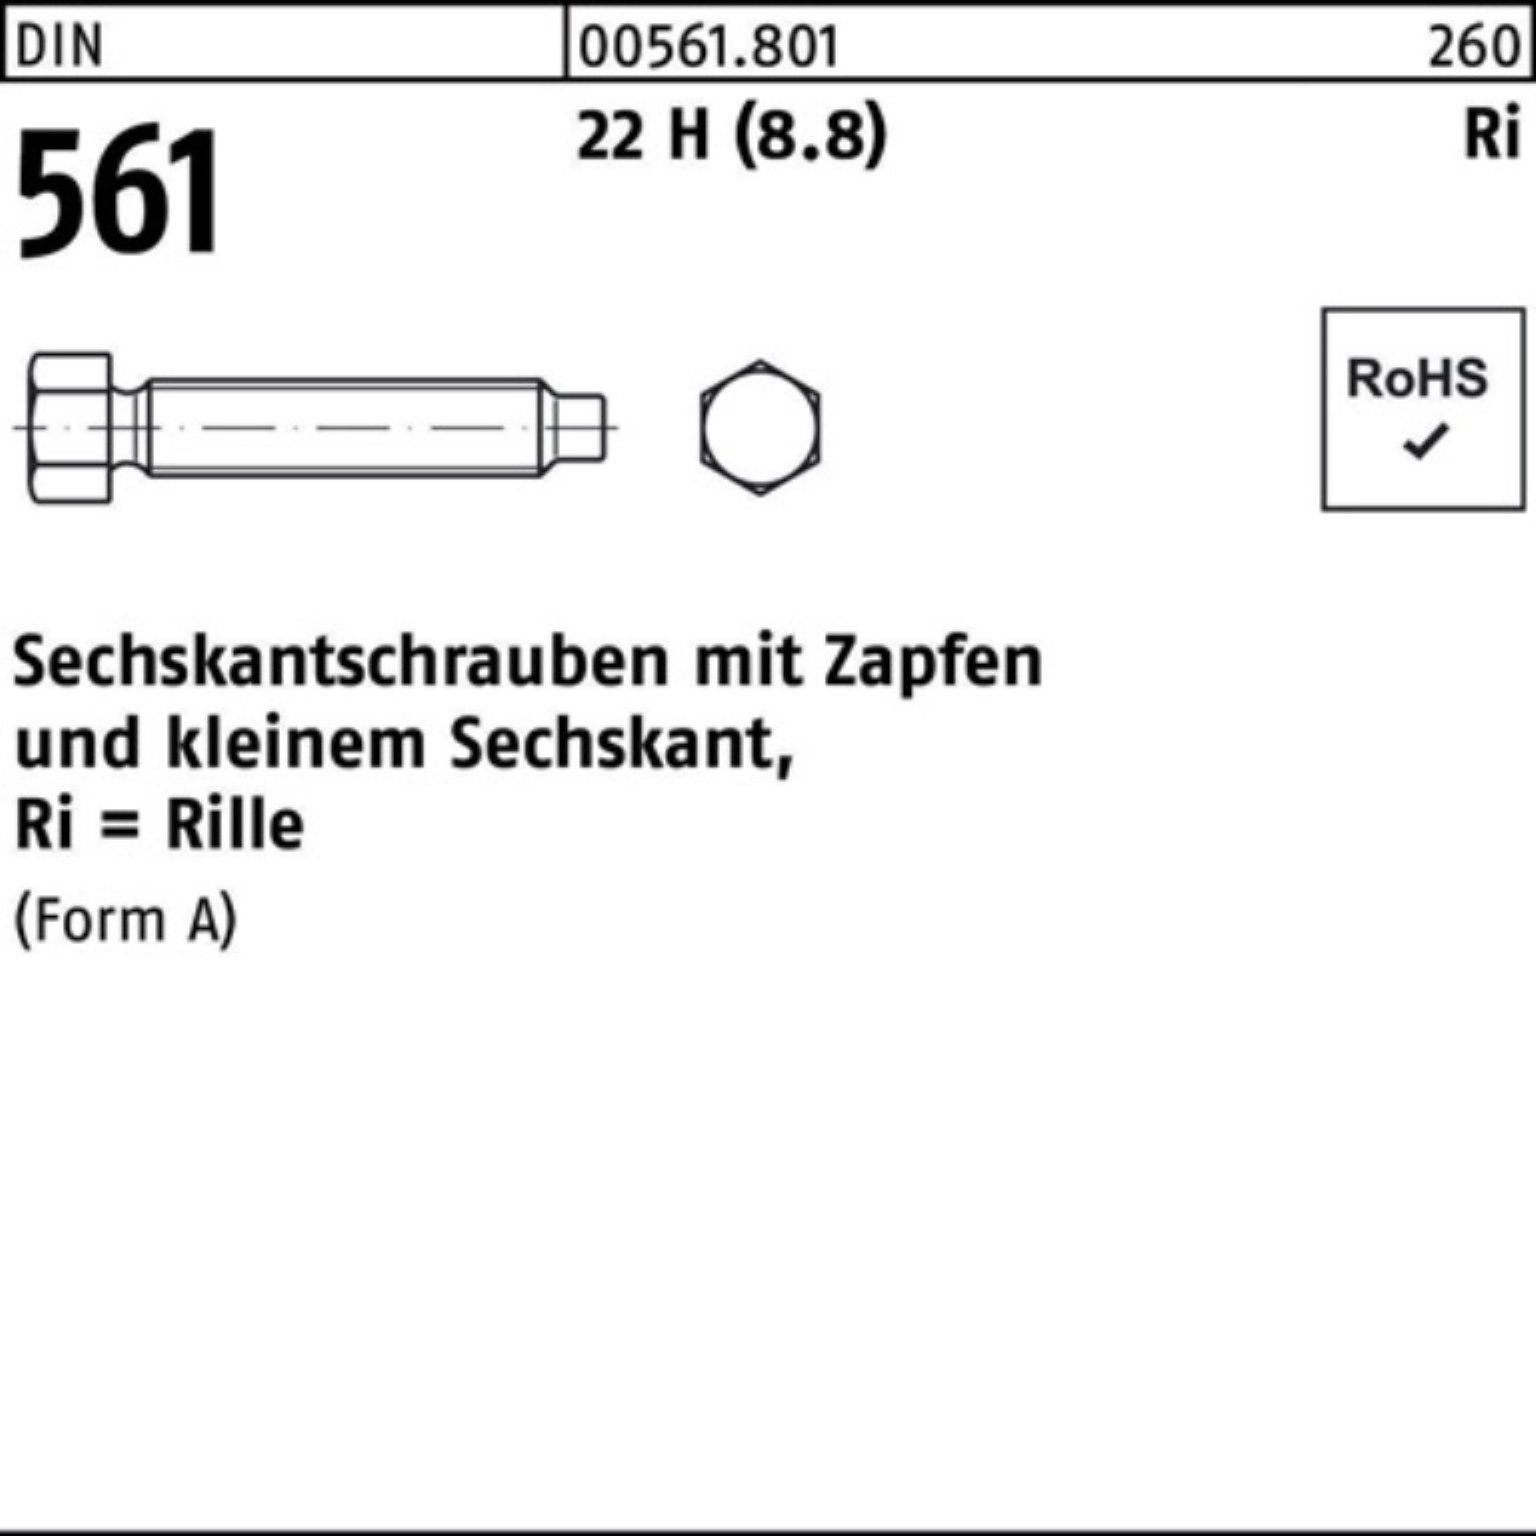 St Zapfen 16 6x Sechskantschraube (8.8) Sechskantschraube Pack AM H 100 22 561 DIN 100er Reyher